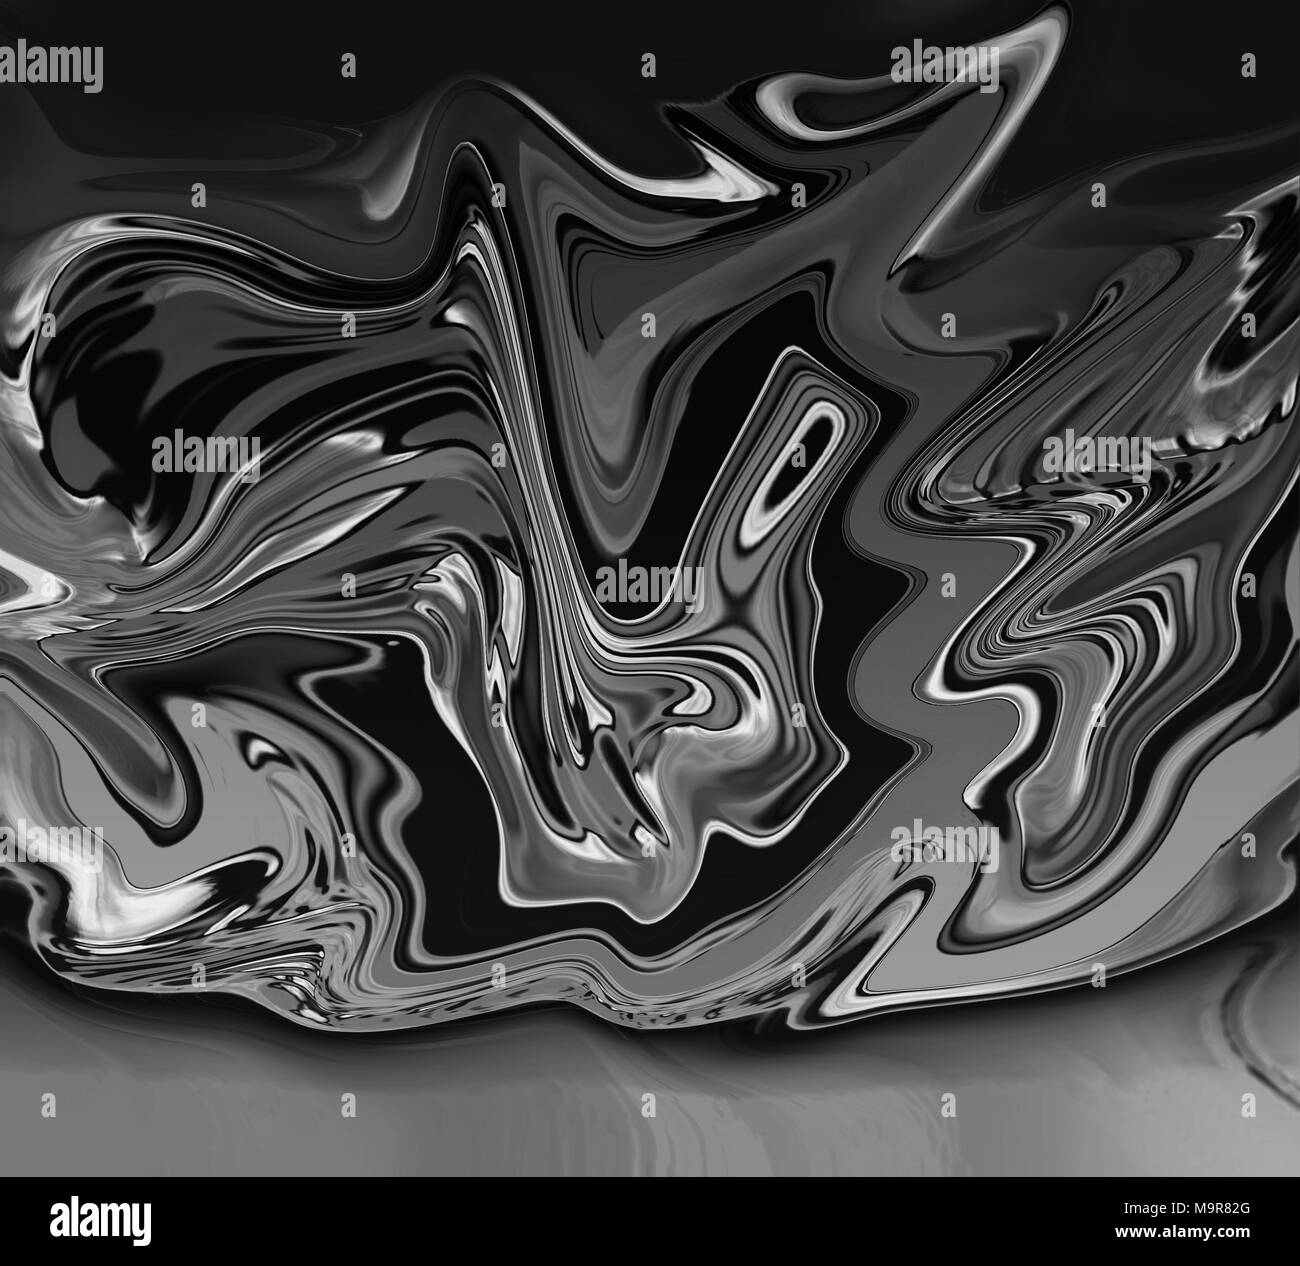 Marble aluminium digital illustration. Black grey chrome liquid texture. Abstract ink marbling pattern background. Steel effect backdrop. Stock Photo